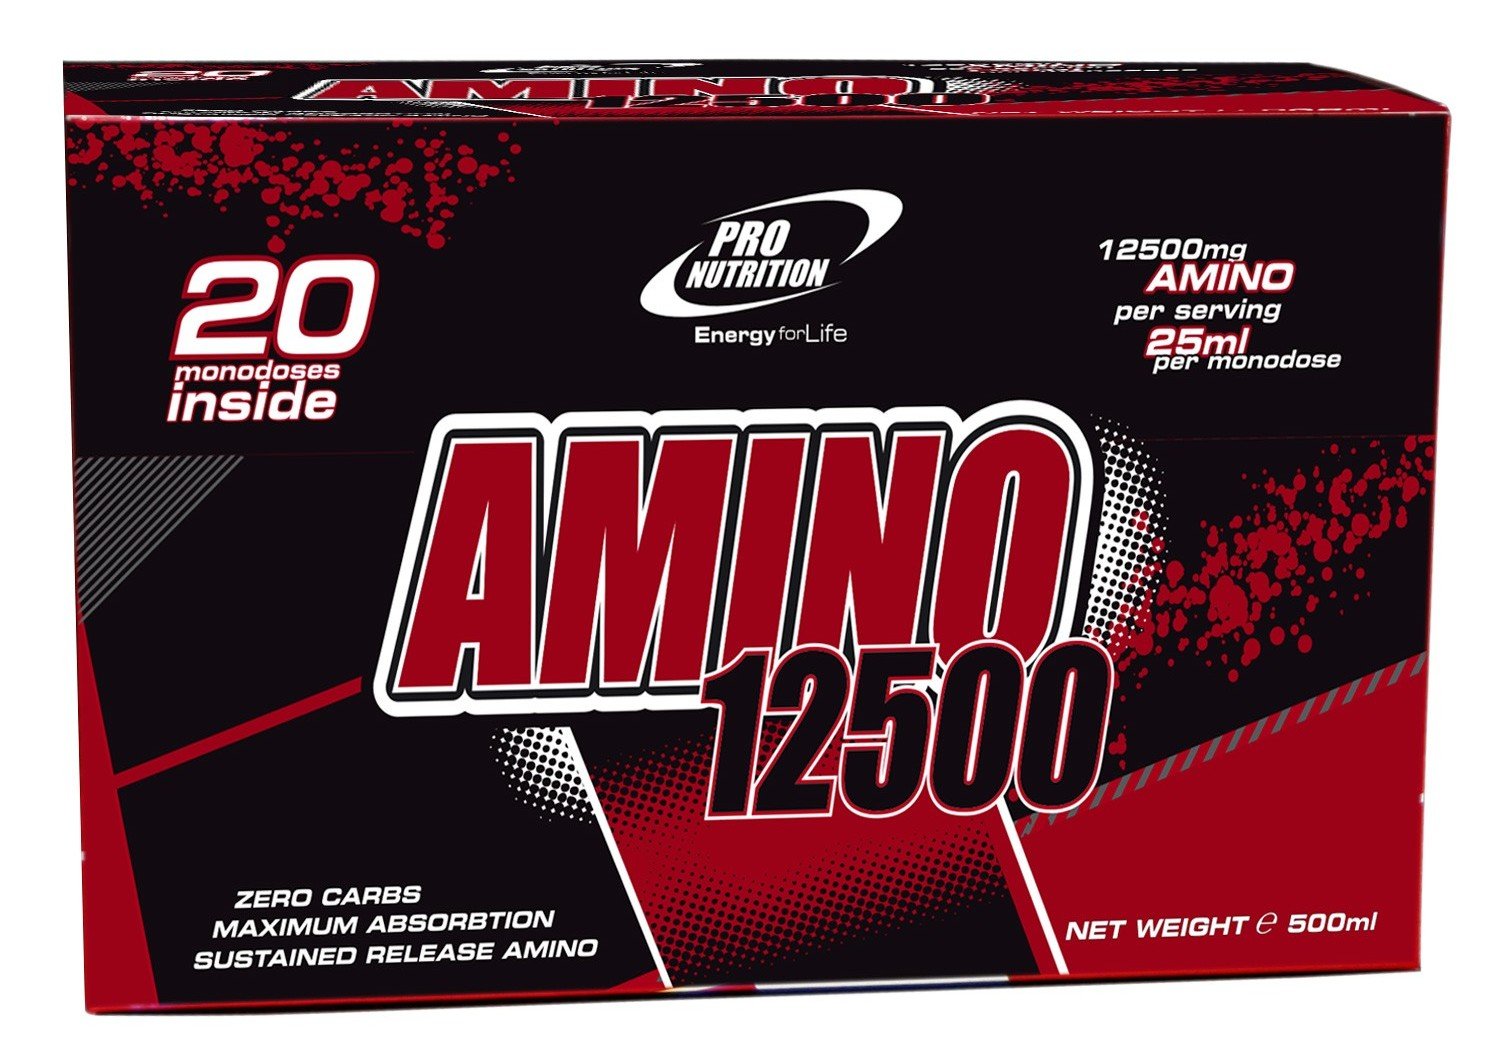 Amino 12500, 20 pcs, Pro Nutrition. Amino acid complex. 